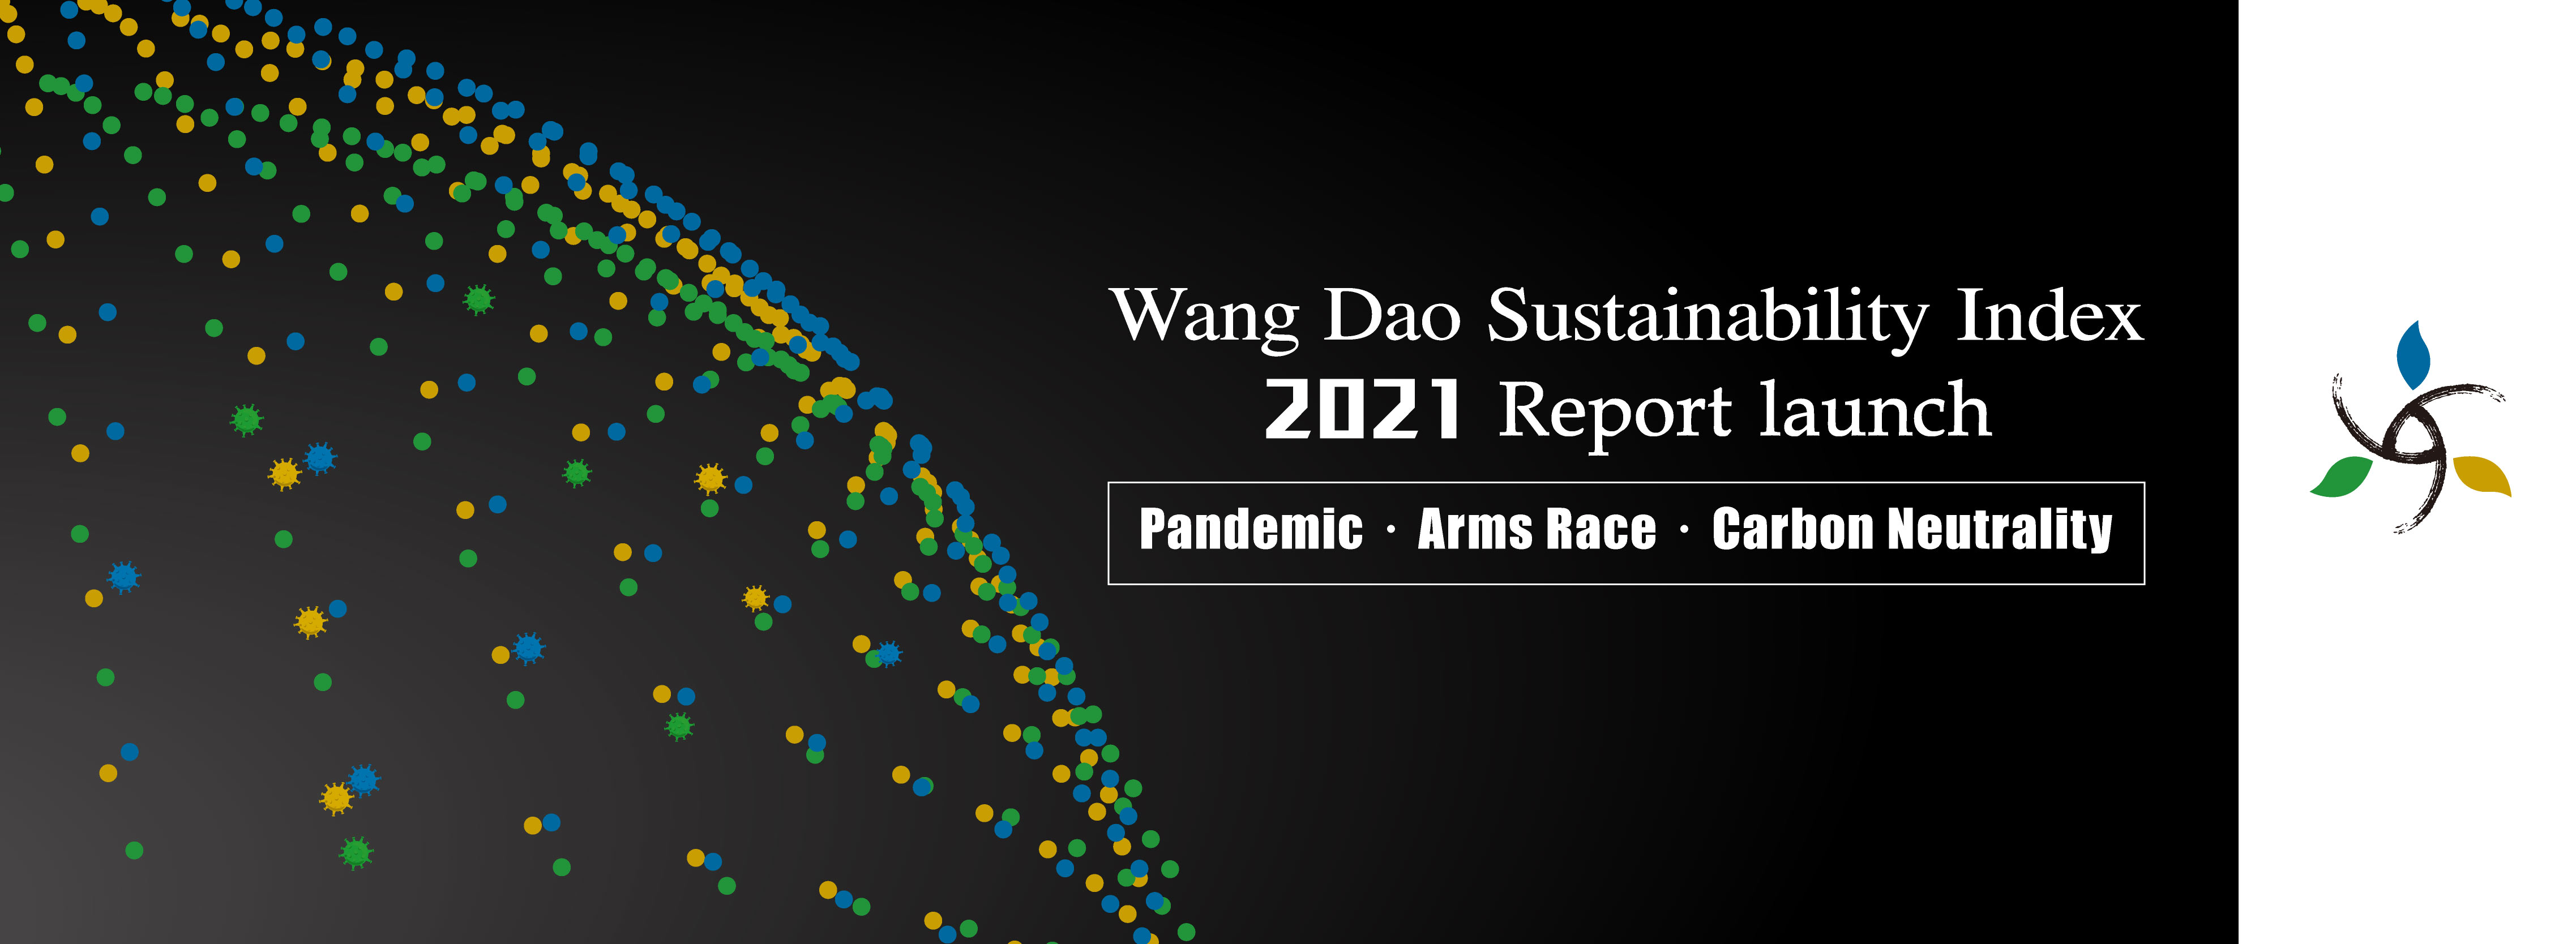 2021 Wang Dao Sustainability Index, WDSI Launch